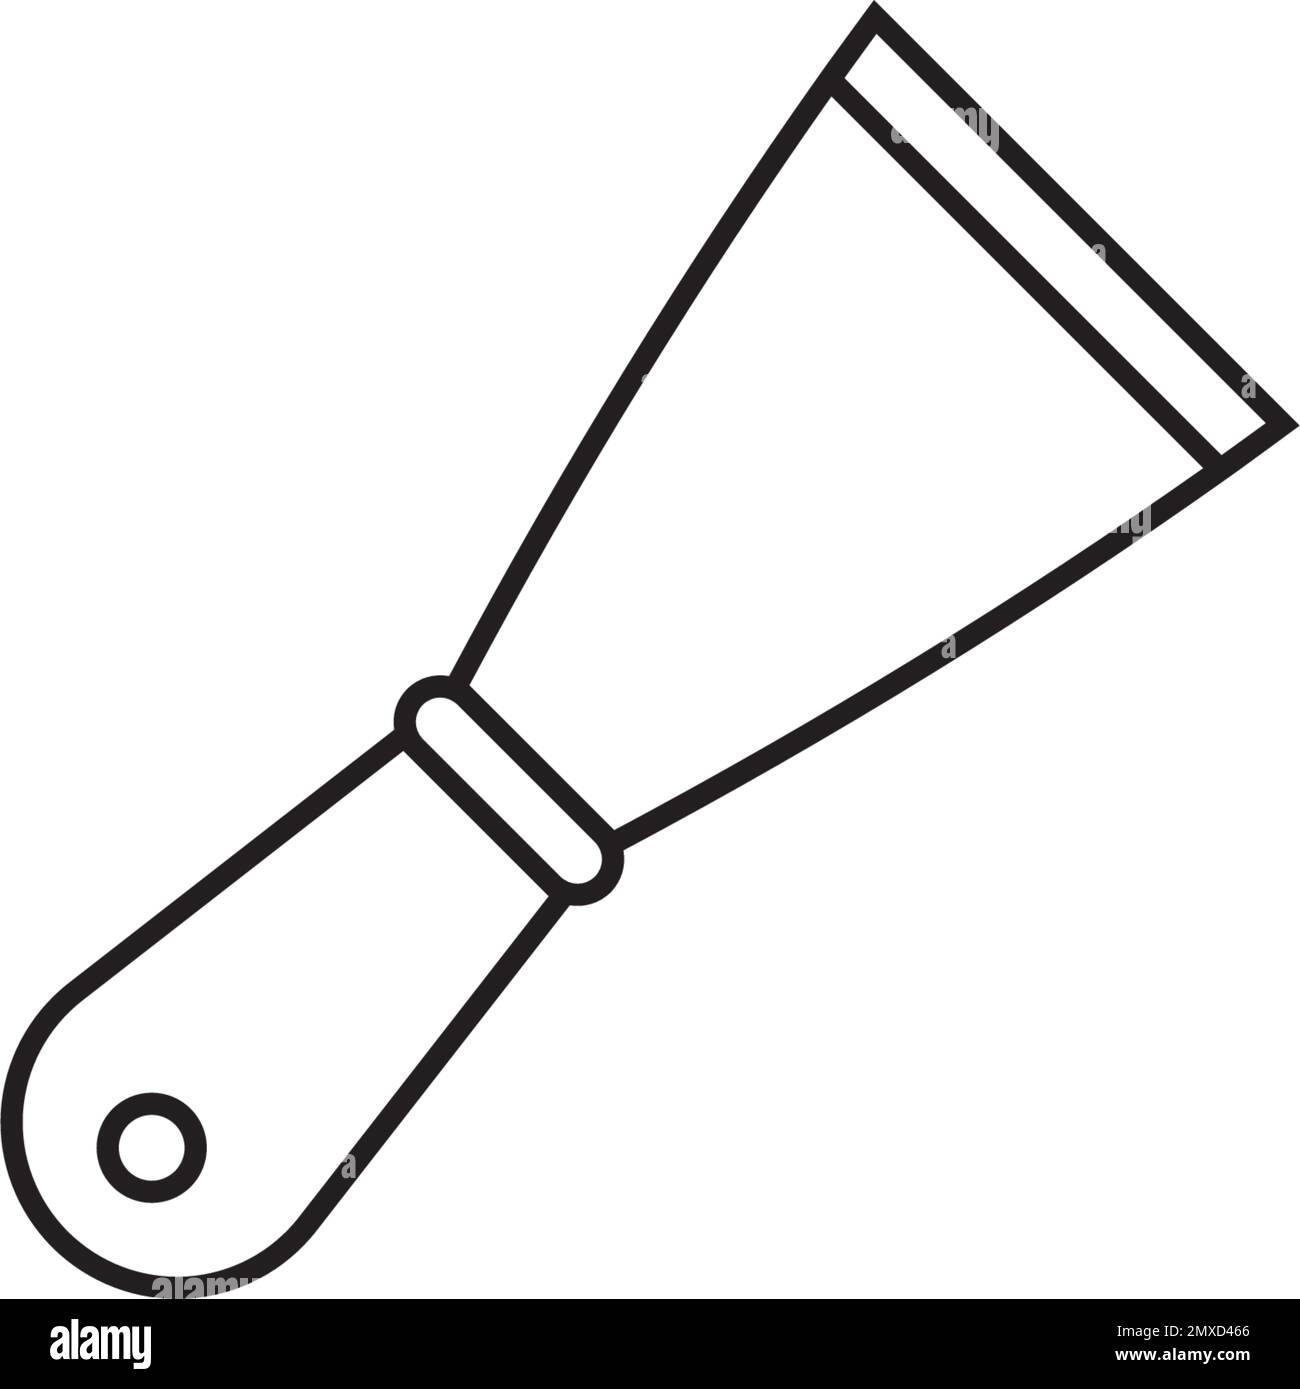 https://c8.alamy.com/comp/2MXD466/scraper-icon-vector-spatula-trendy-design-illustration-eps10-2MXD466.jpg